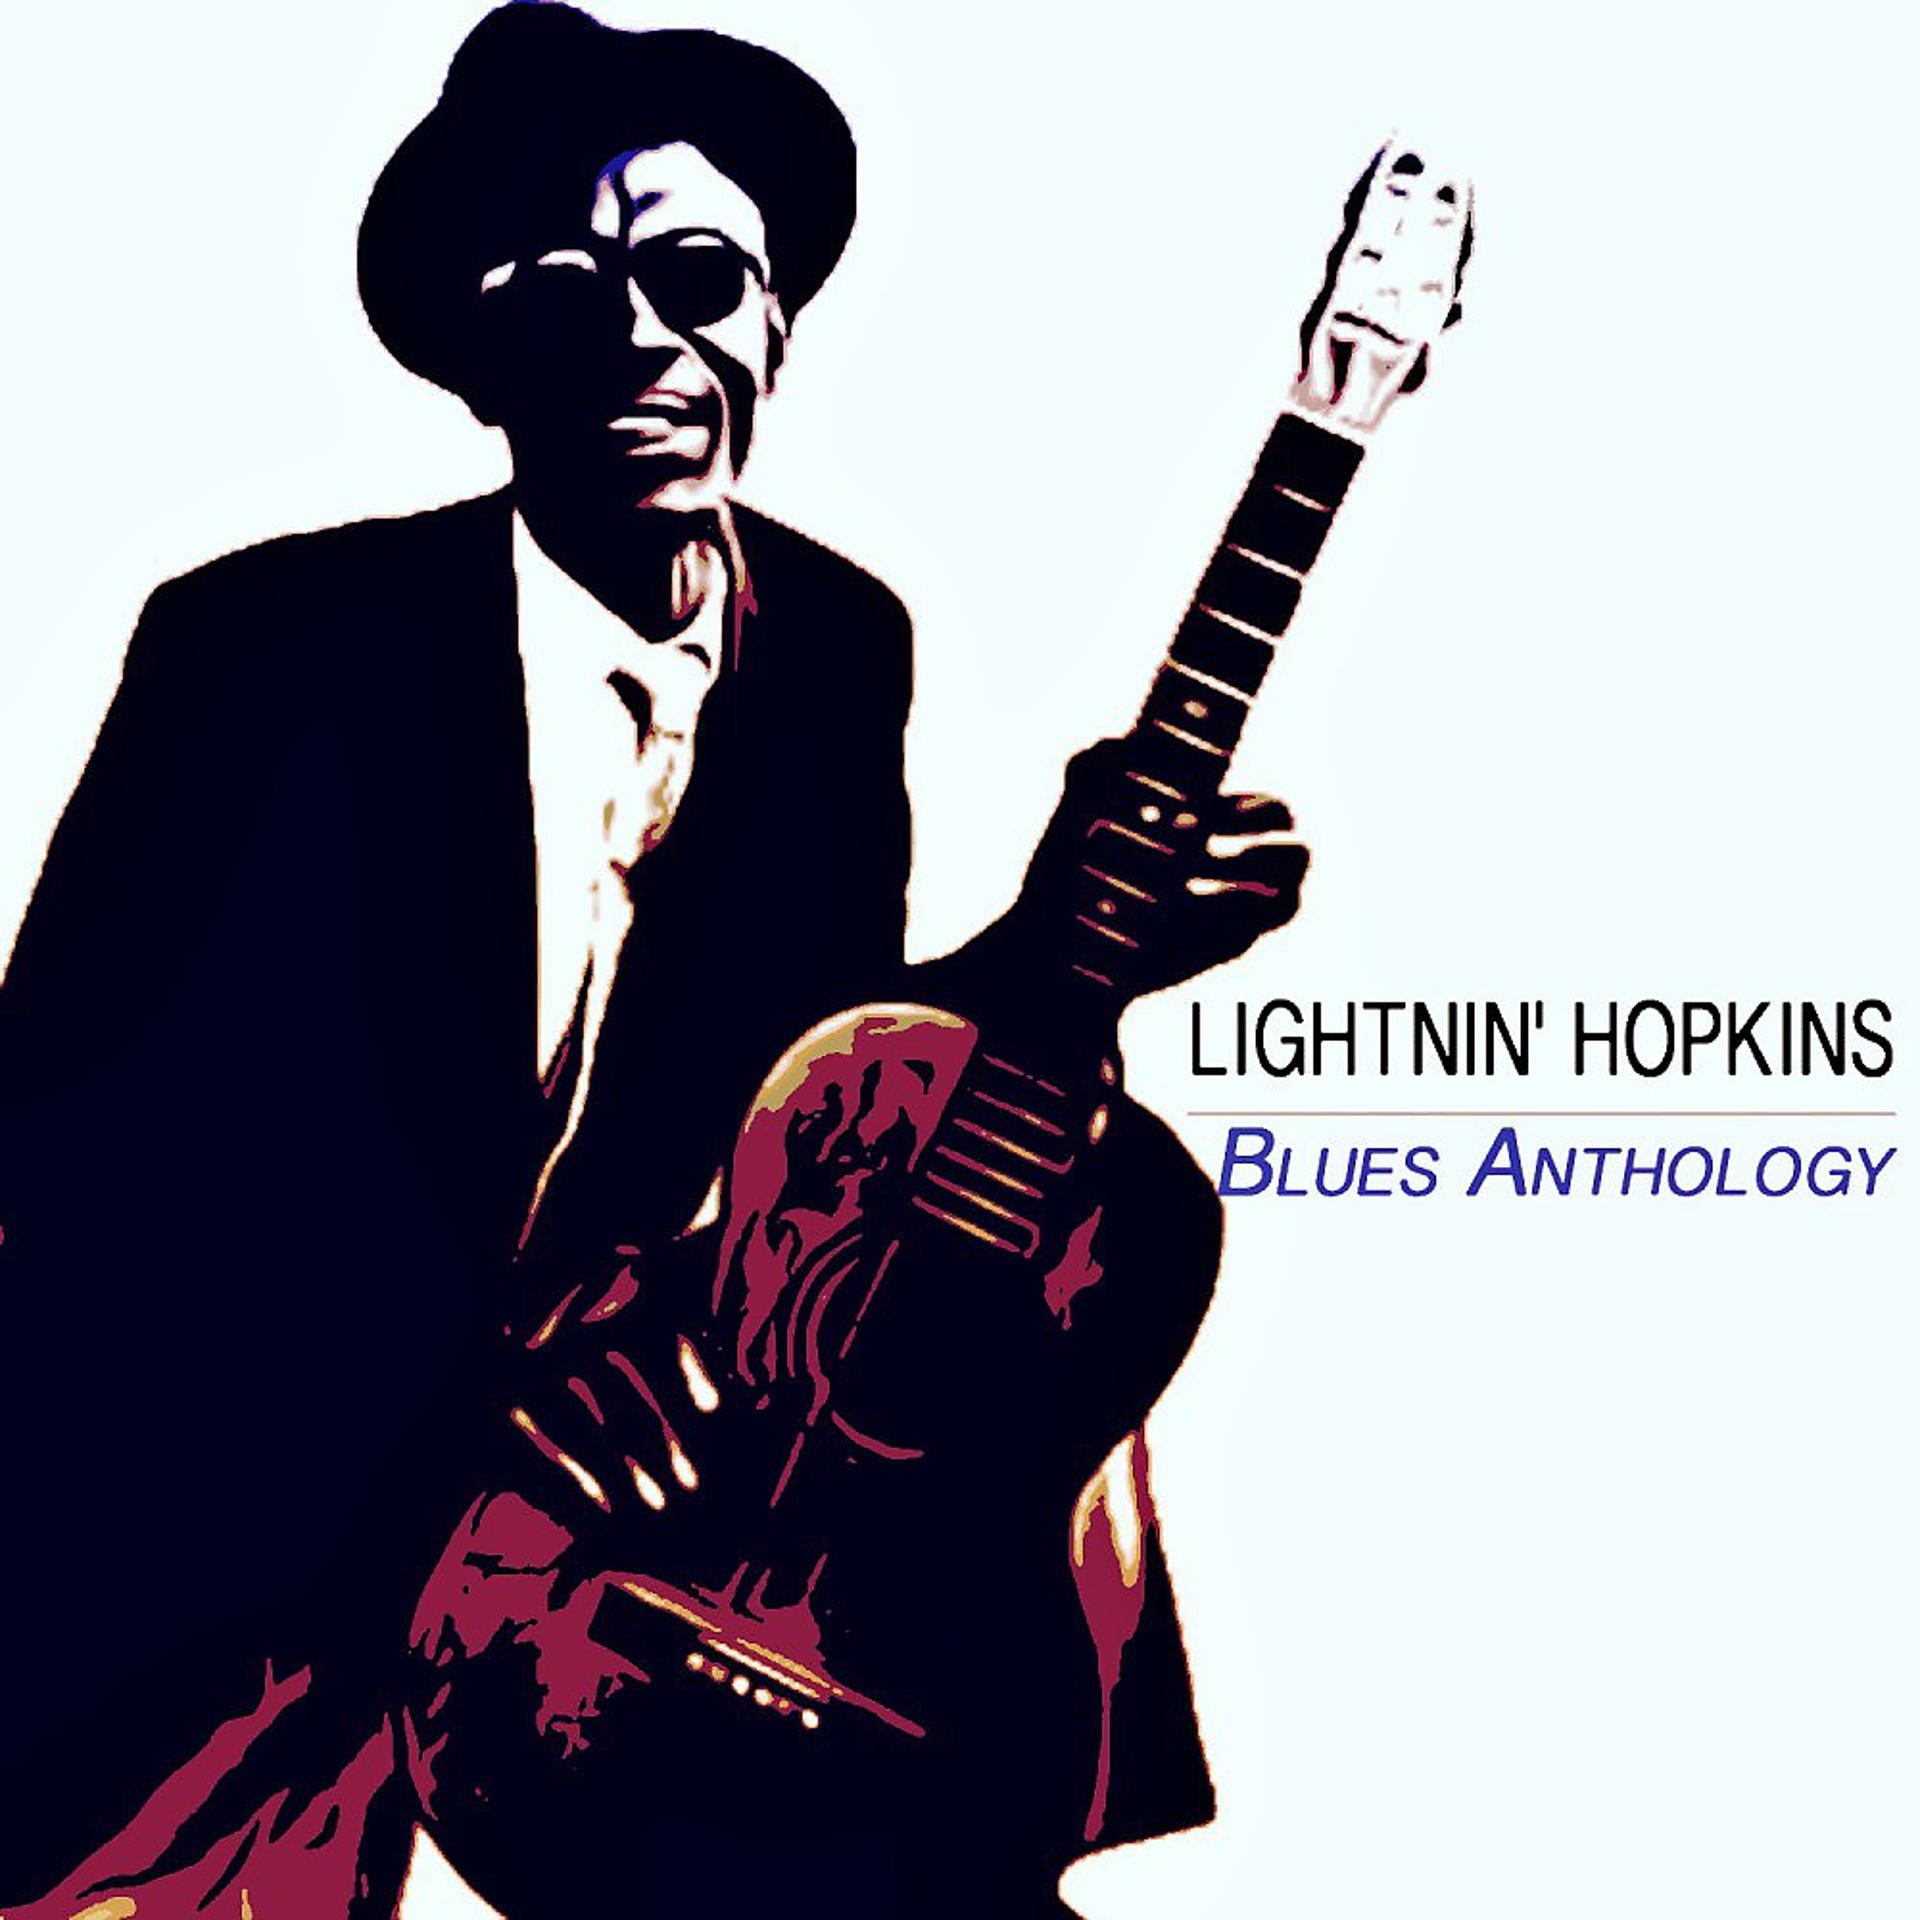 Постер альбома Blues Anthology (Original Recordings)